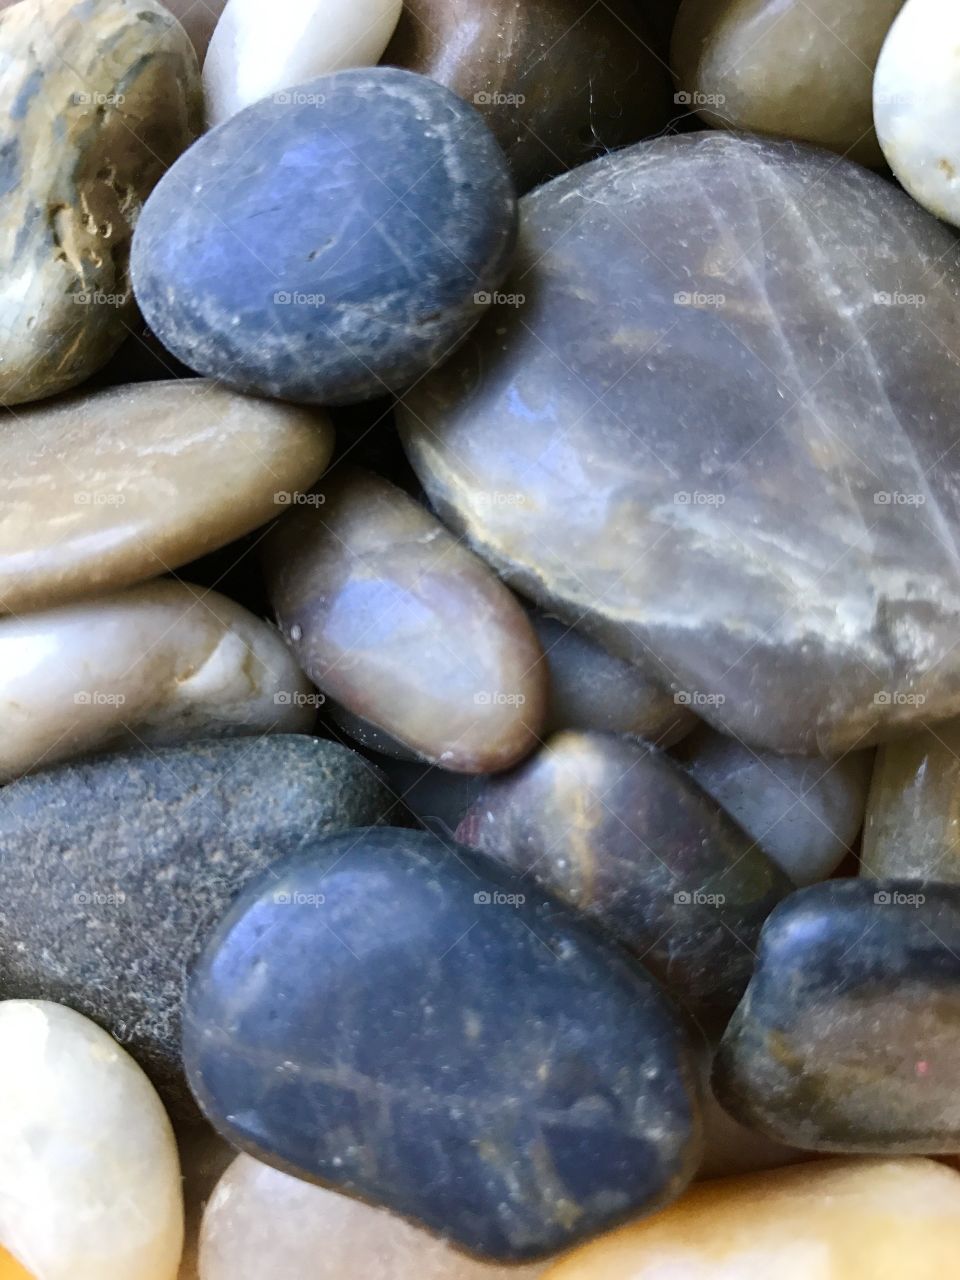 Smooth pebbles